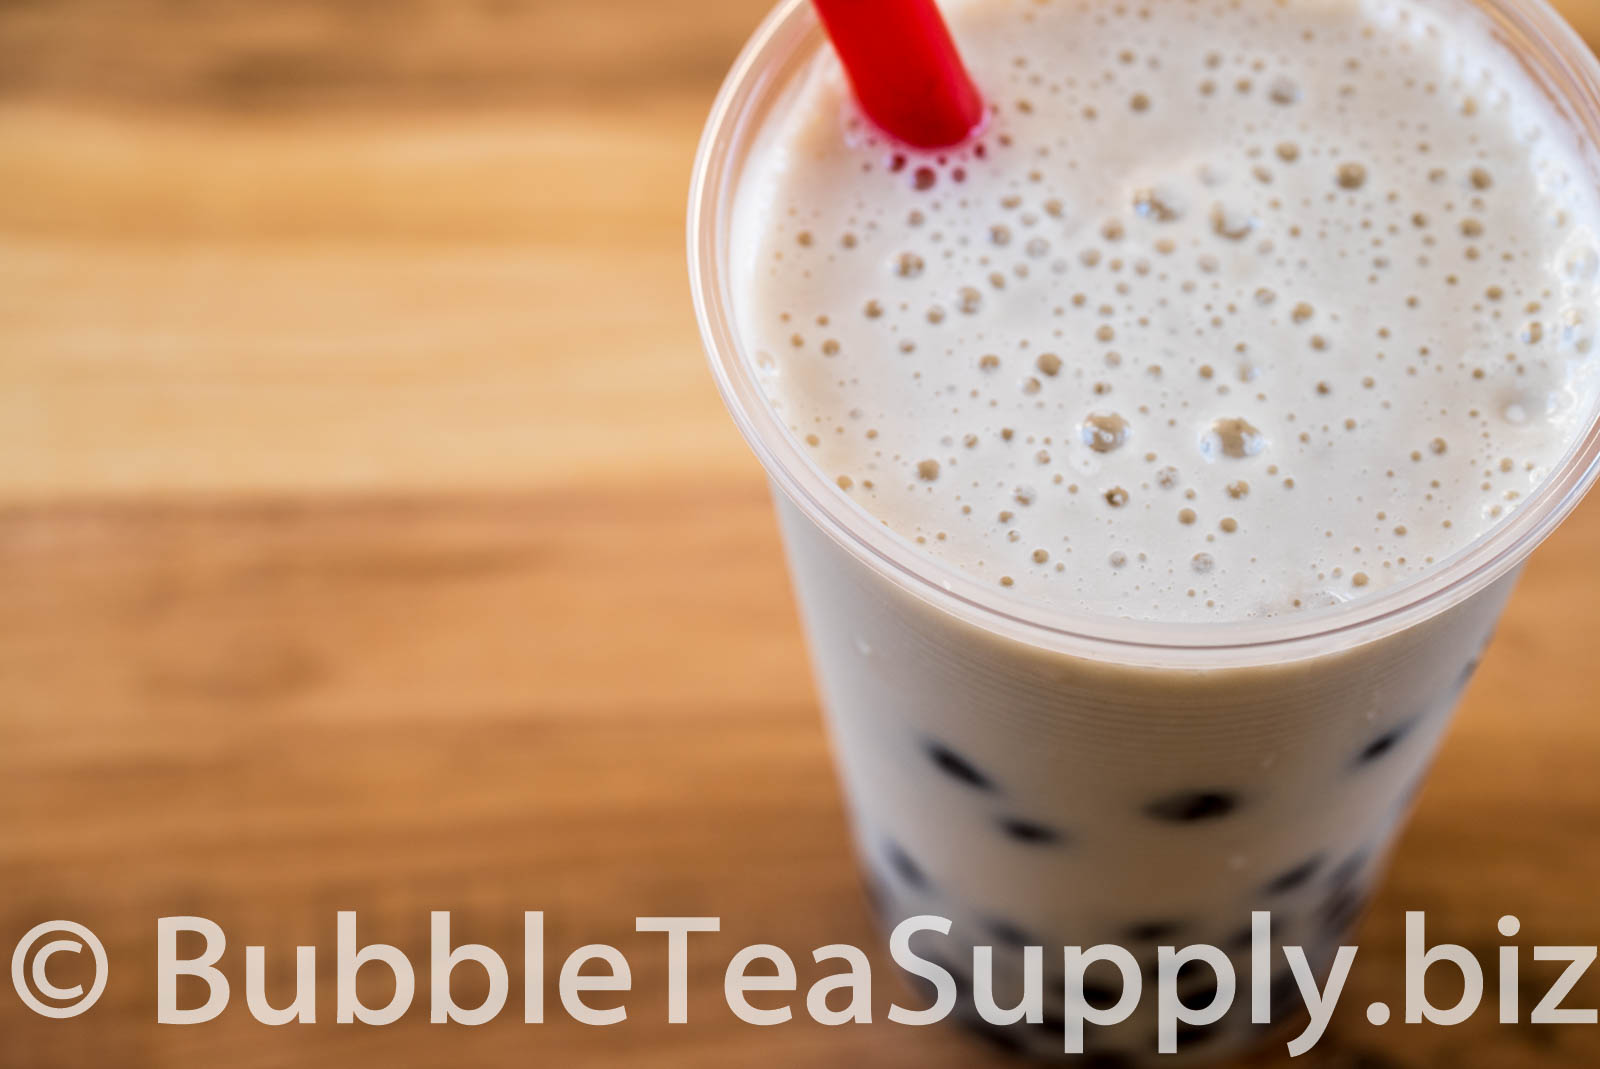 How to Make an Organic Hawaiian Taro Boba Bubble Tea Smoothie Drink by Bubble Tea Supply